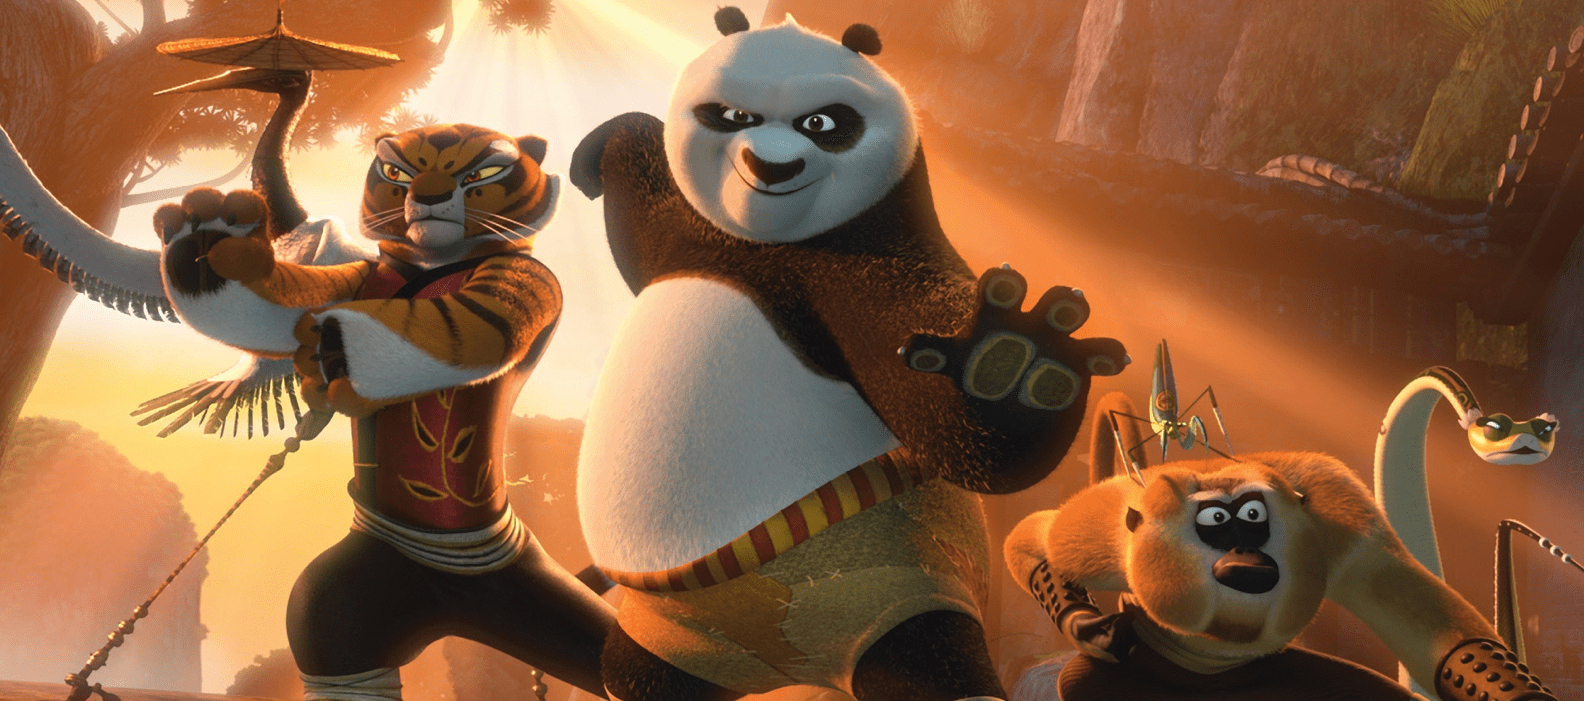 destaque da semana panda kung fu panda 2 39